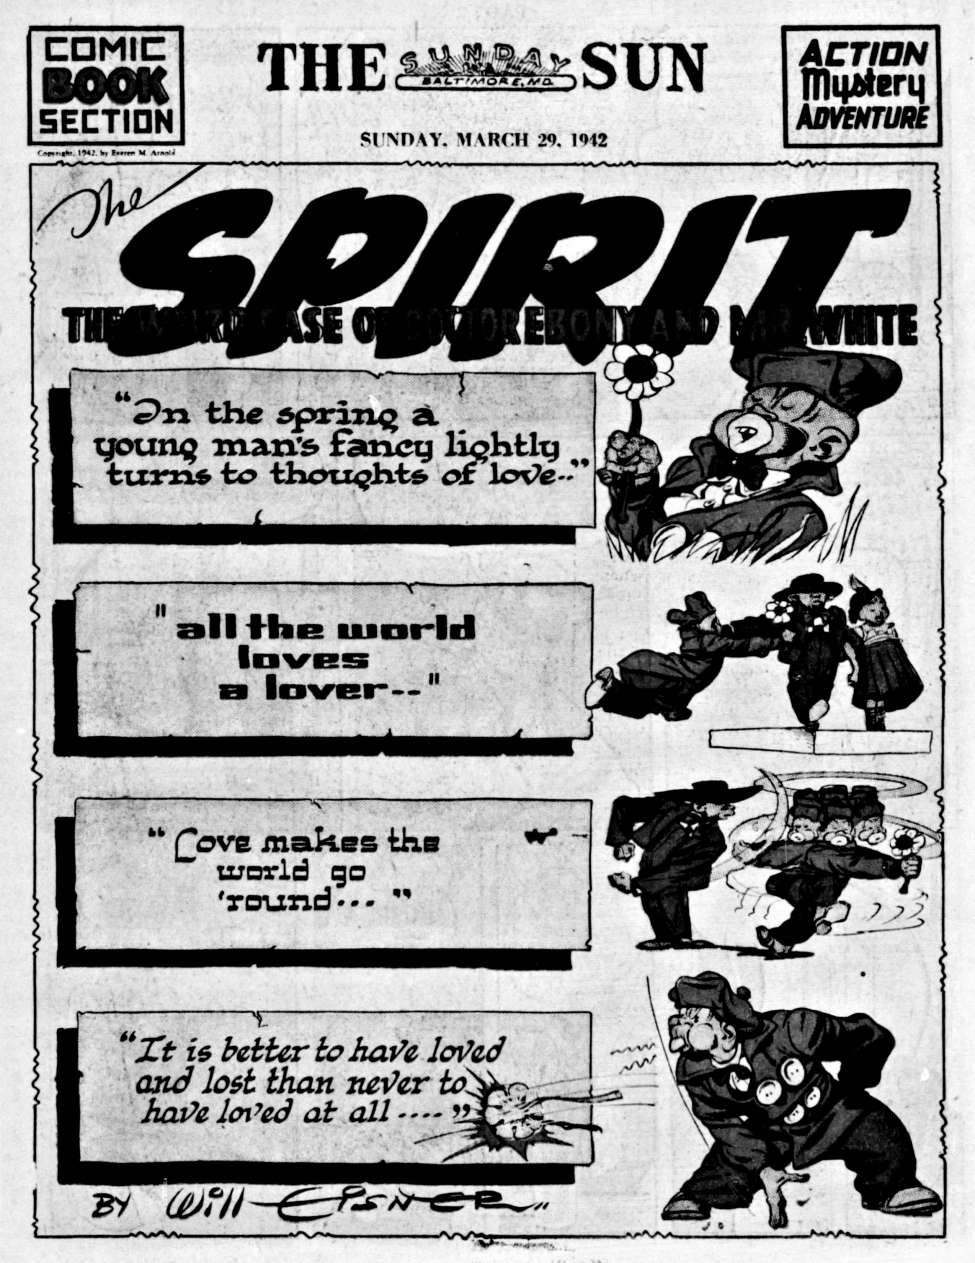 Comic Book Cover For The Spirit (1942-03-29) - Baltimore Sun (b/w) - Version 1